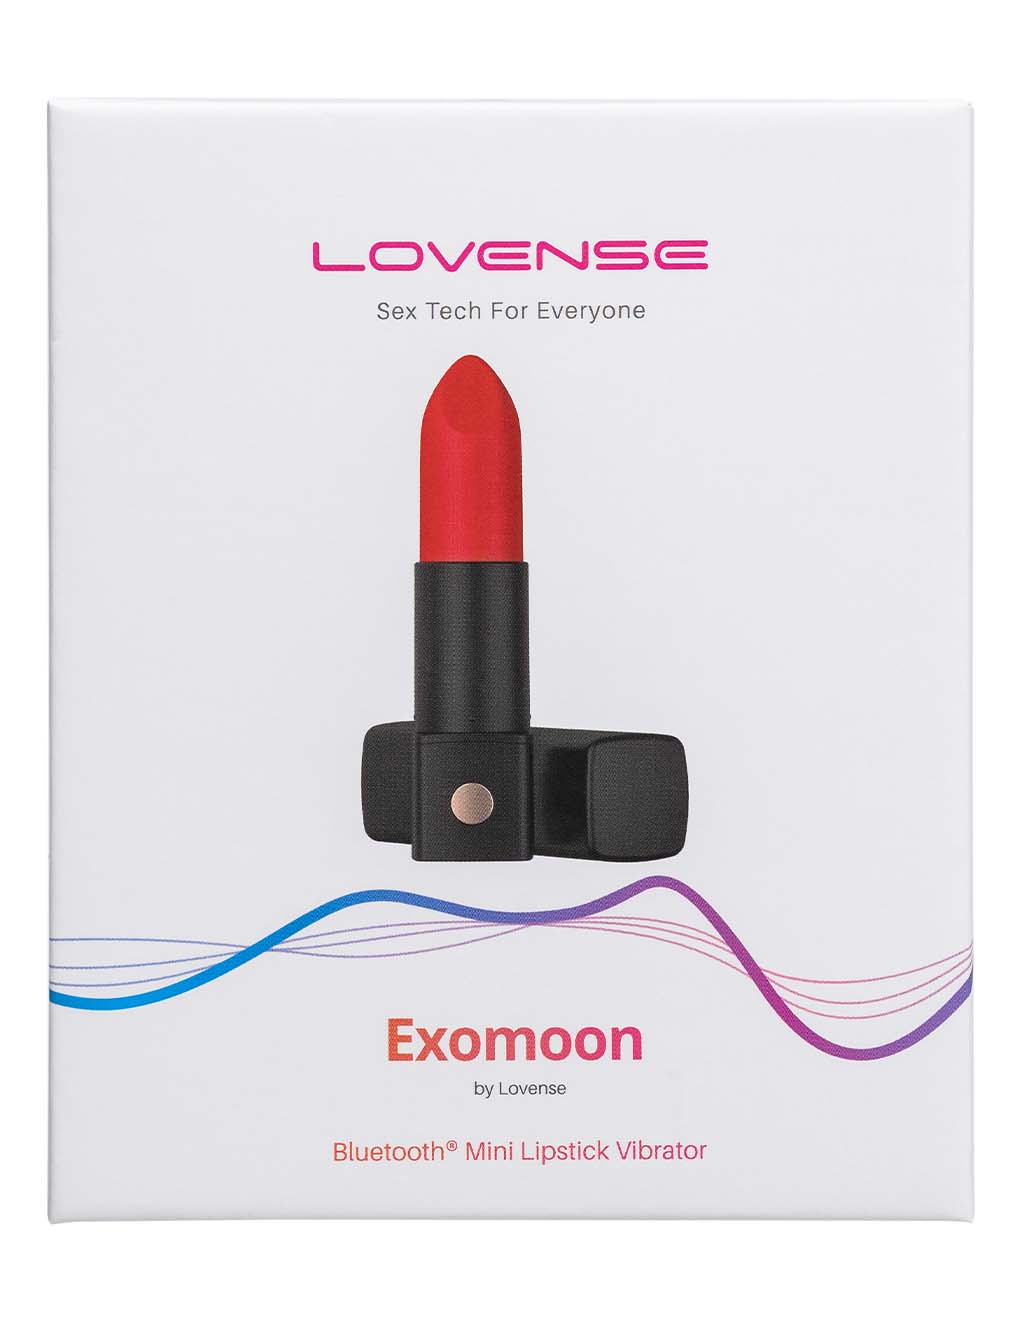 Lovense Exomoon- Box Front